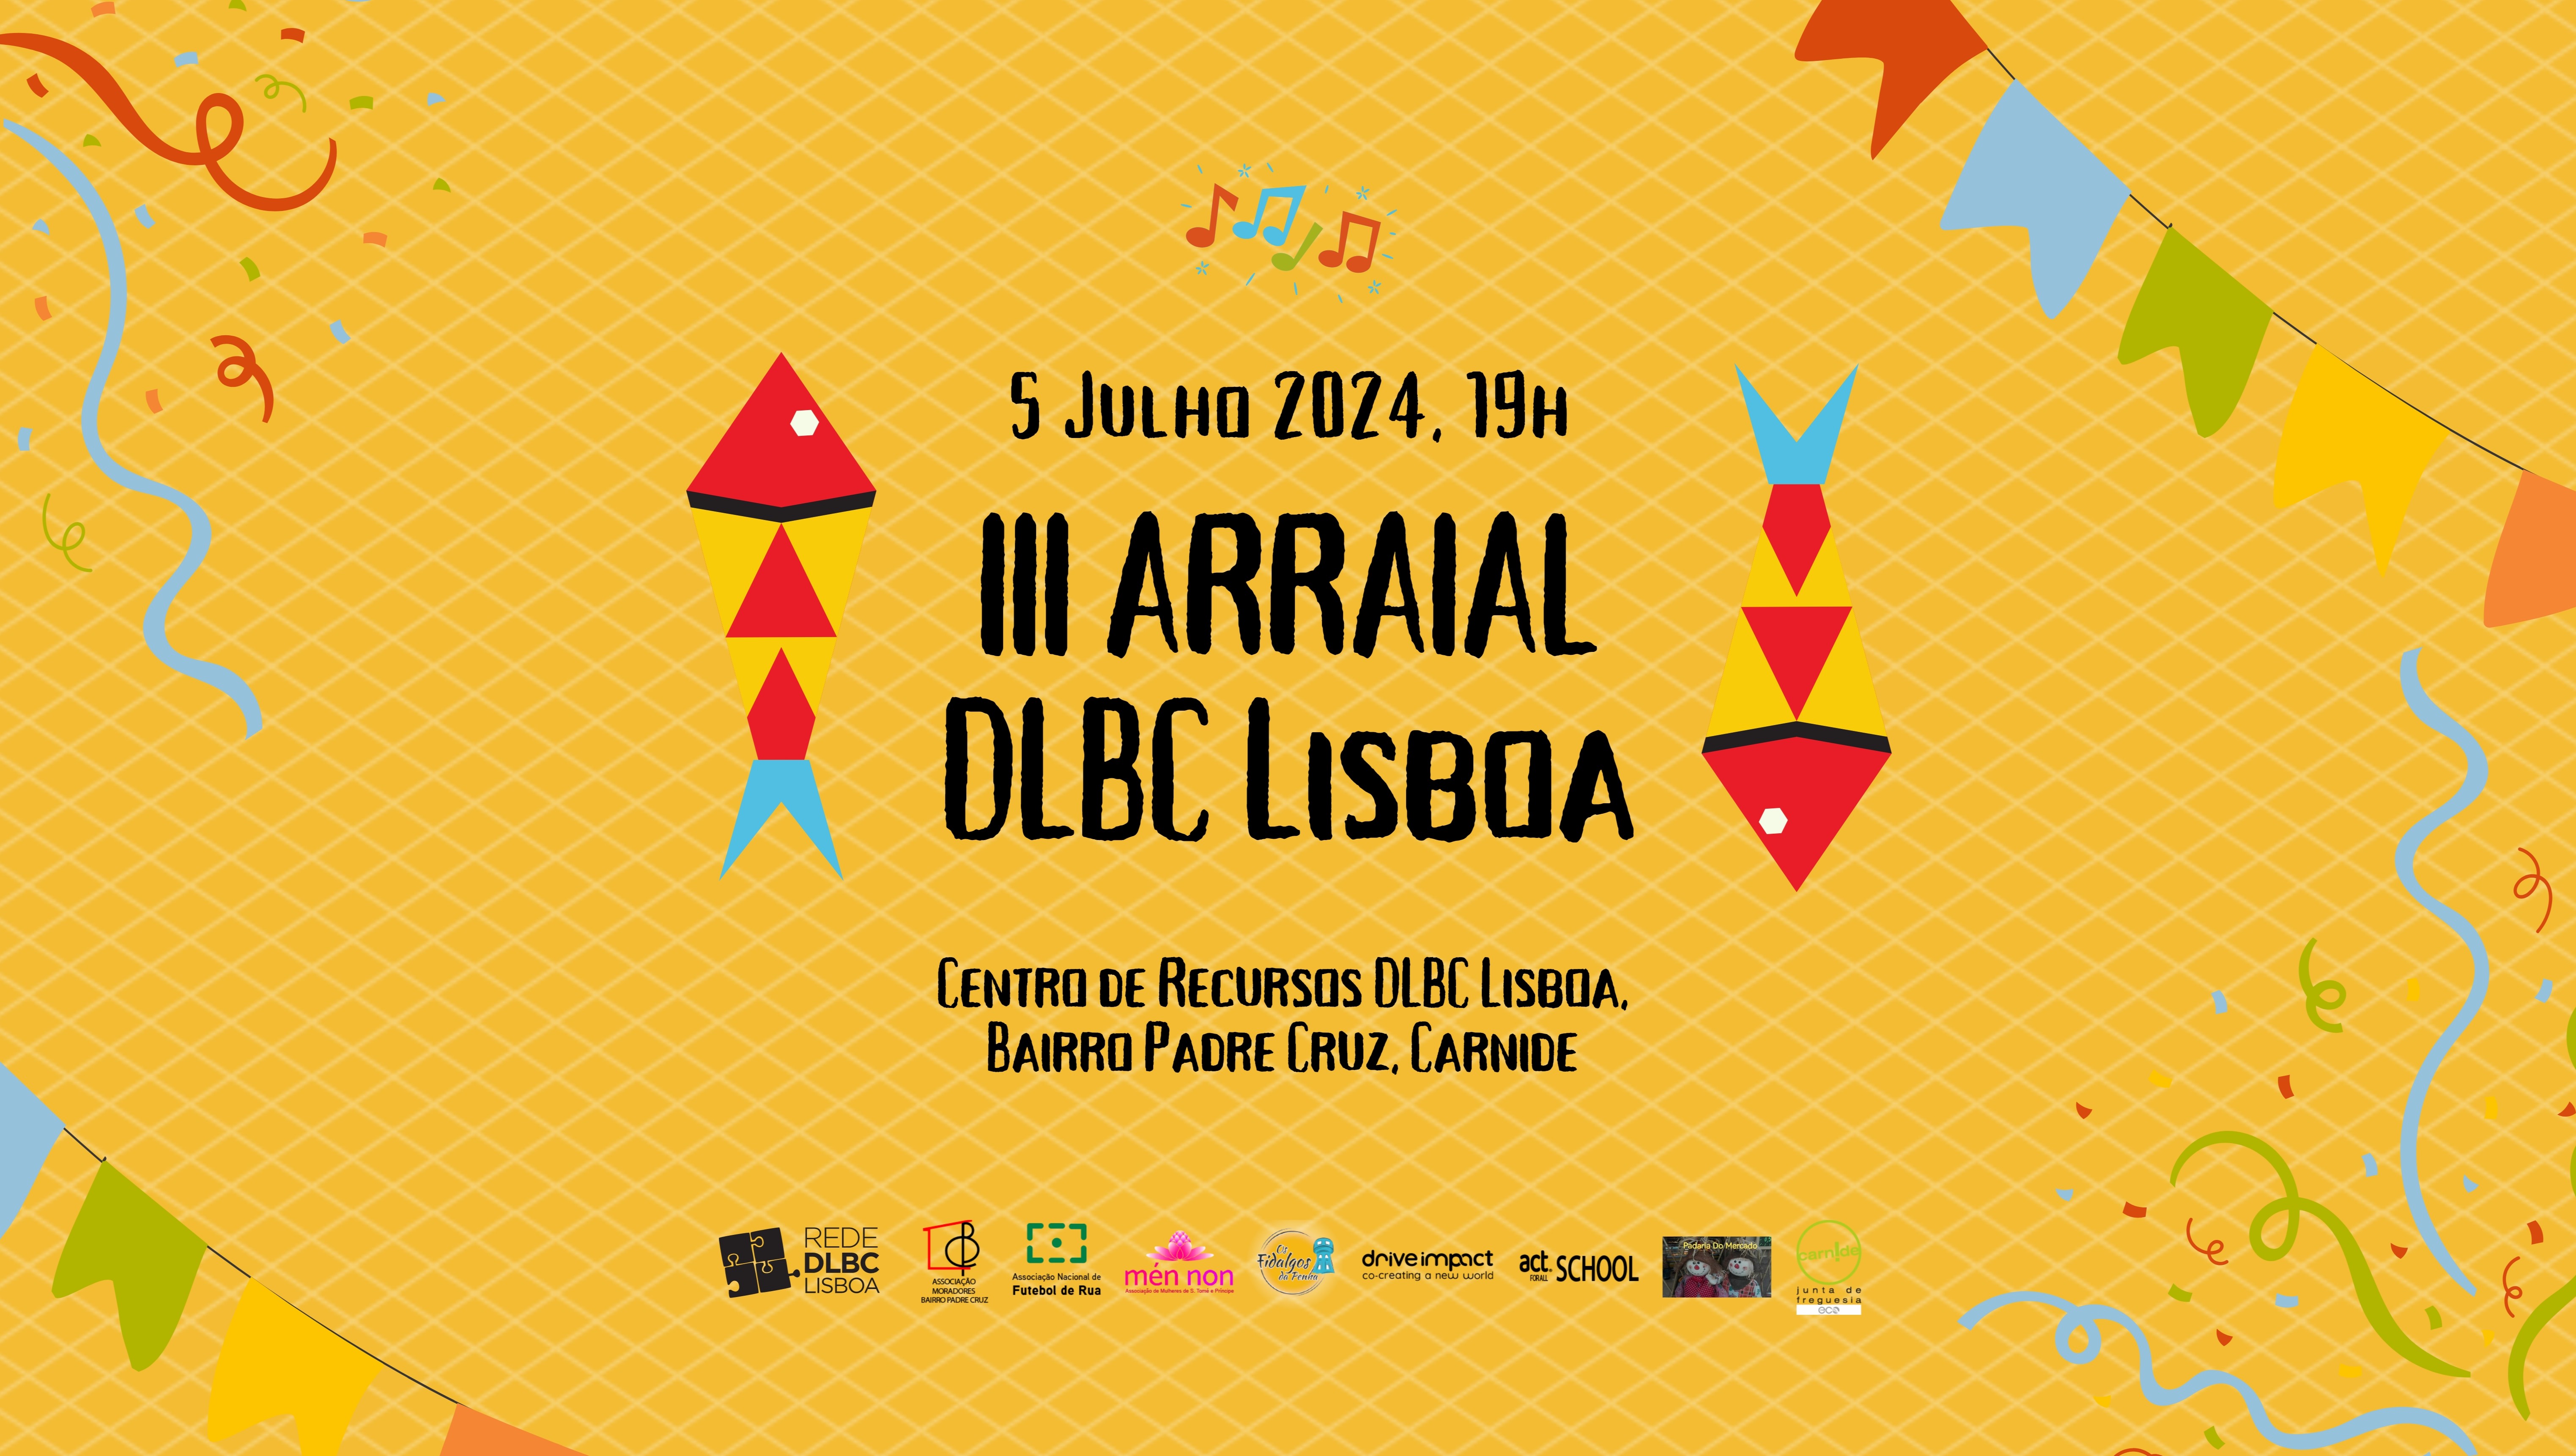 III Arraial DLBC Lisboa - Banner.jpg